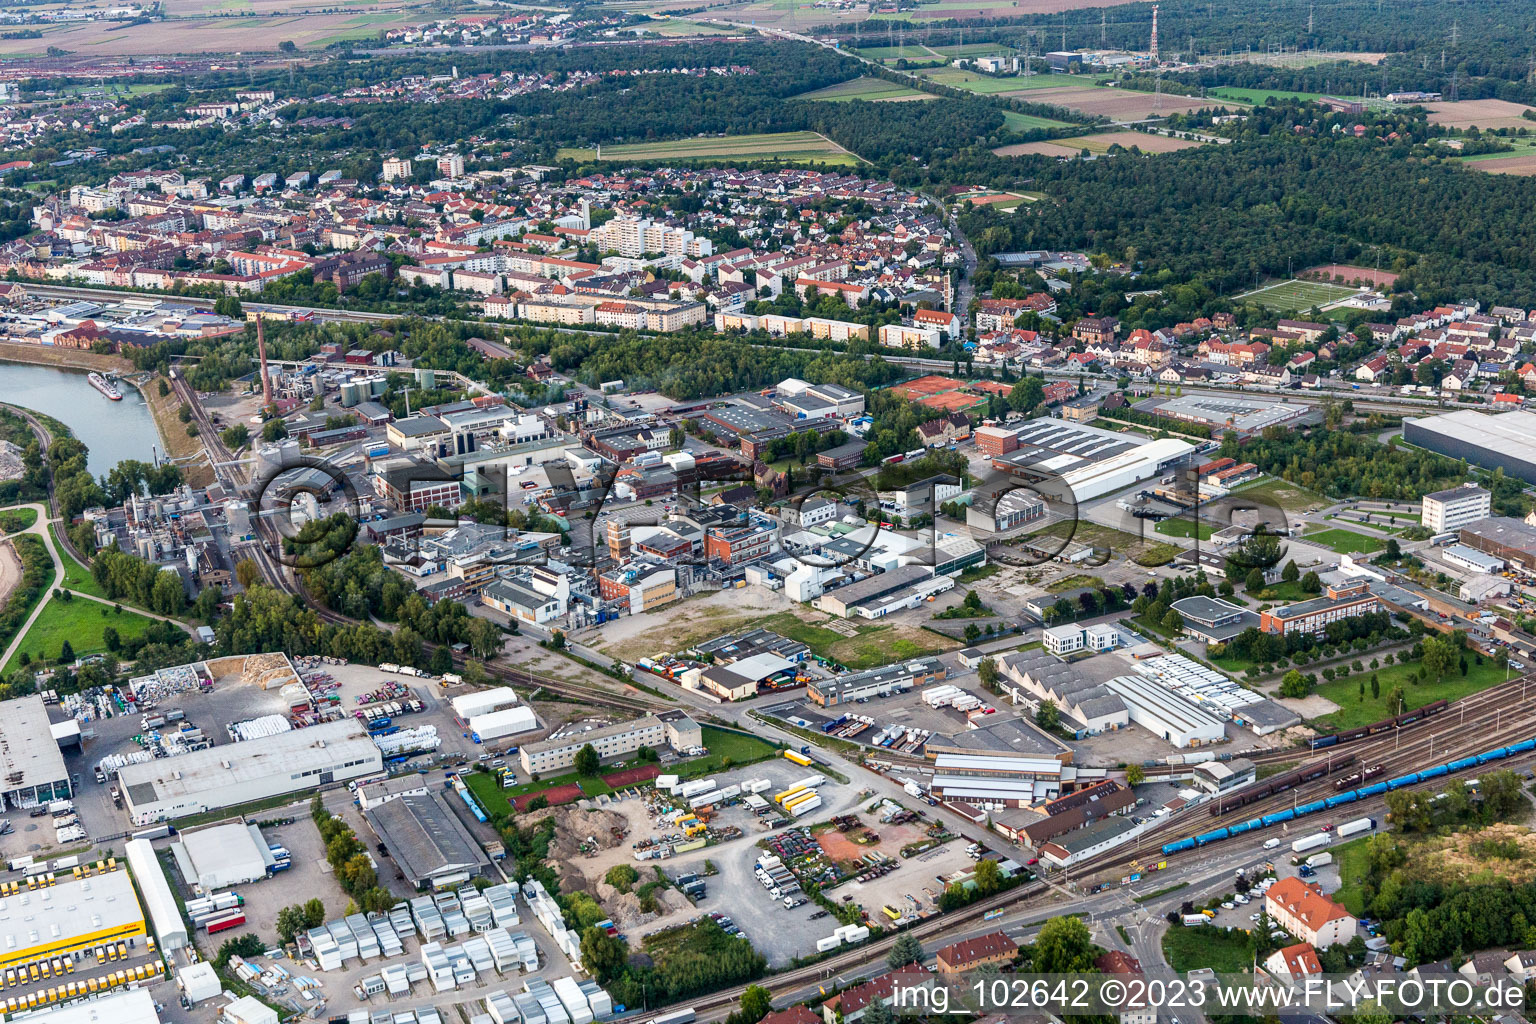 TIB Chemicals in the district Rheinau in Mannheim in the state Baden-Wuerttemberg, Germany